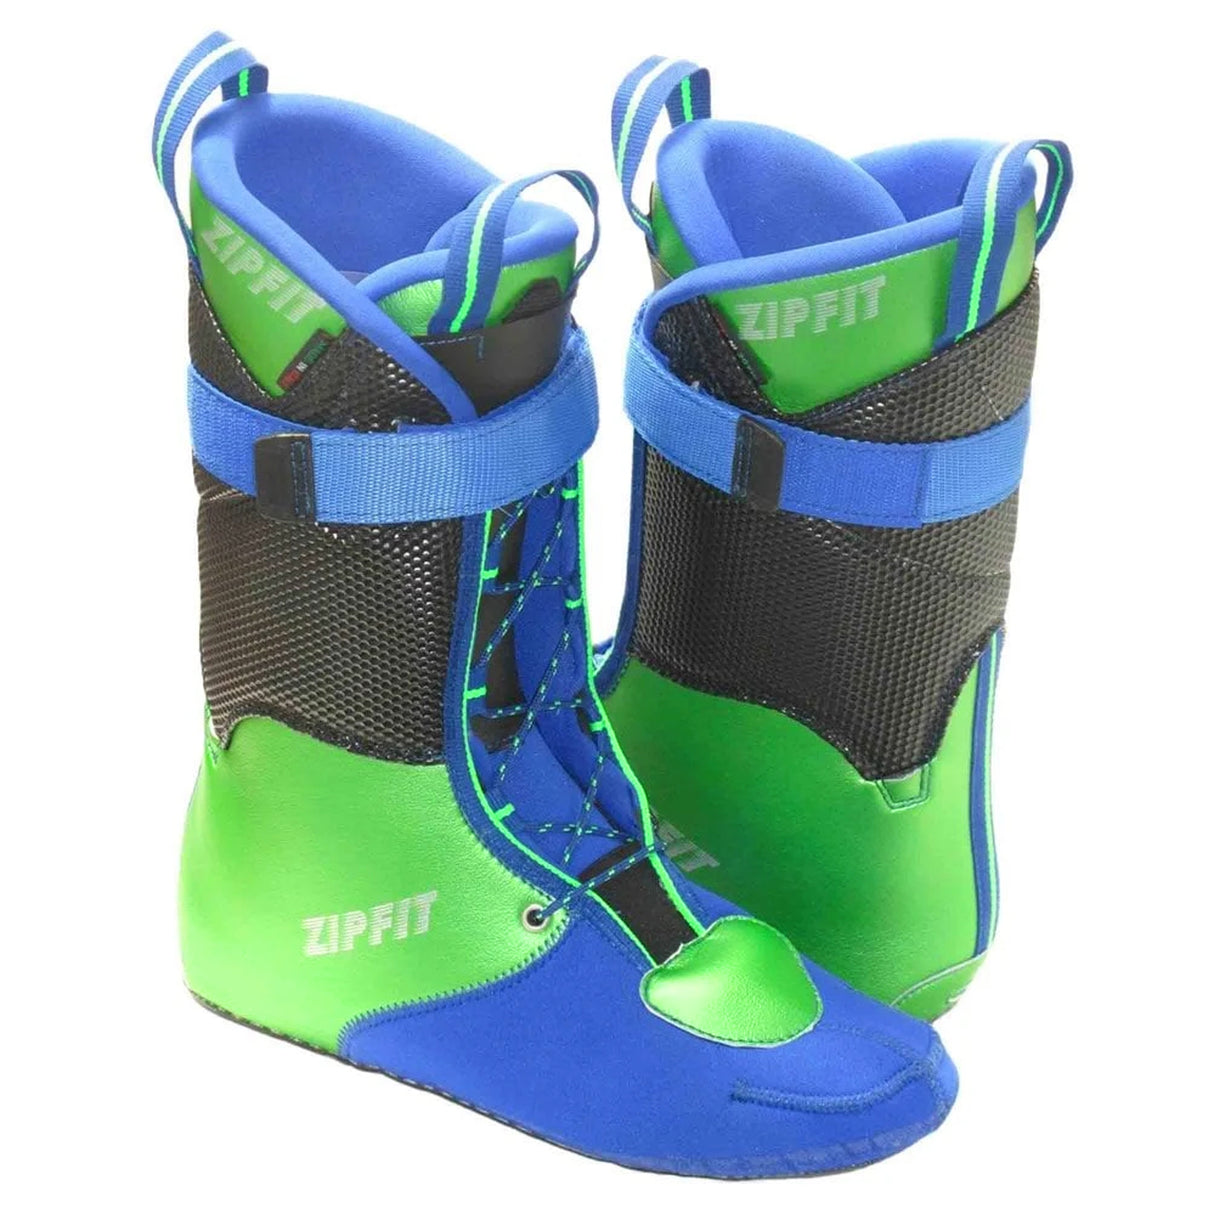 Zip Fit Grand Prix FreeRide Stealth Ski Boot Liners